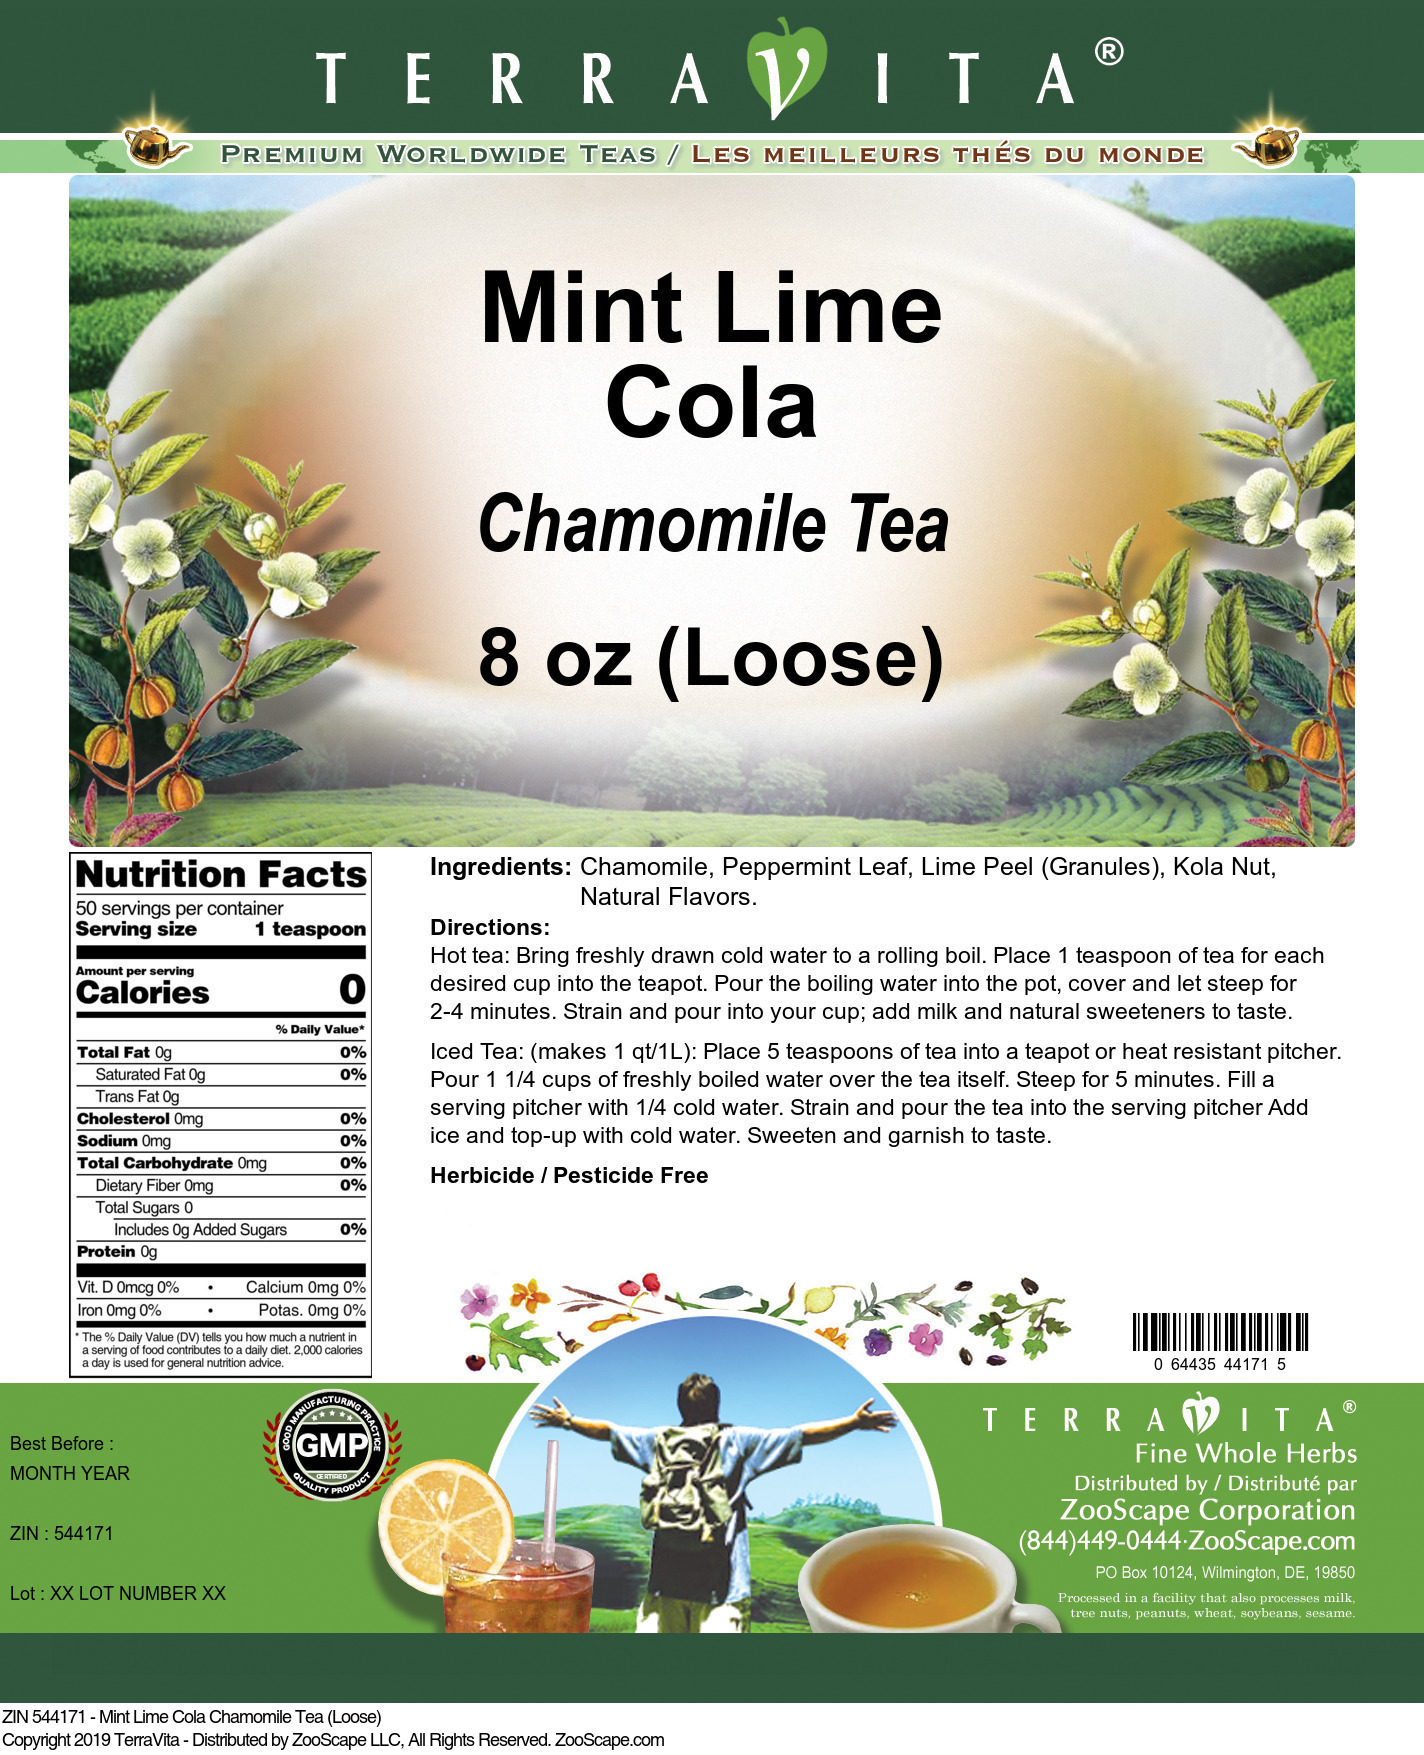 Mint Lime Cola Chamomile Tea (Loose) - Label